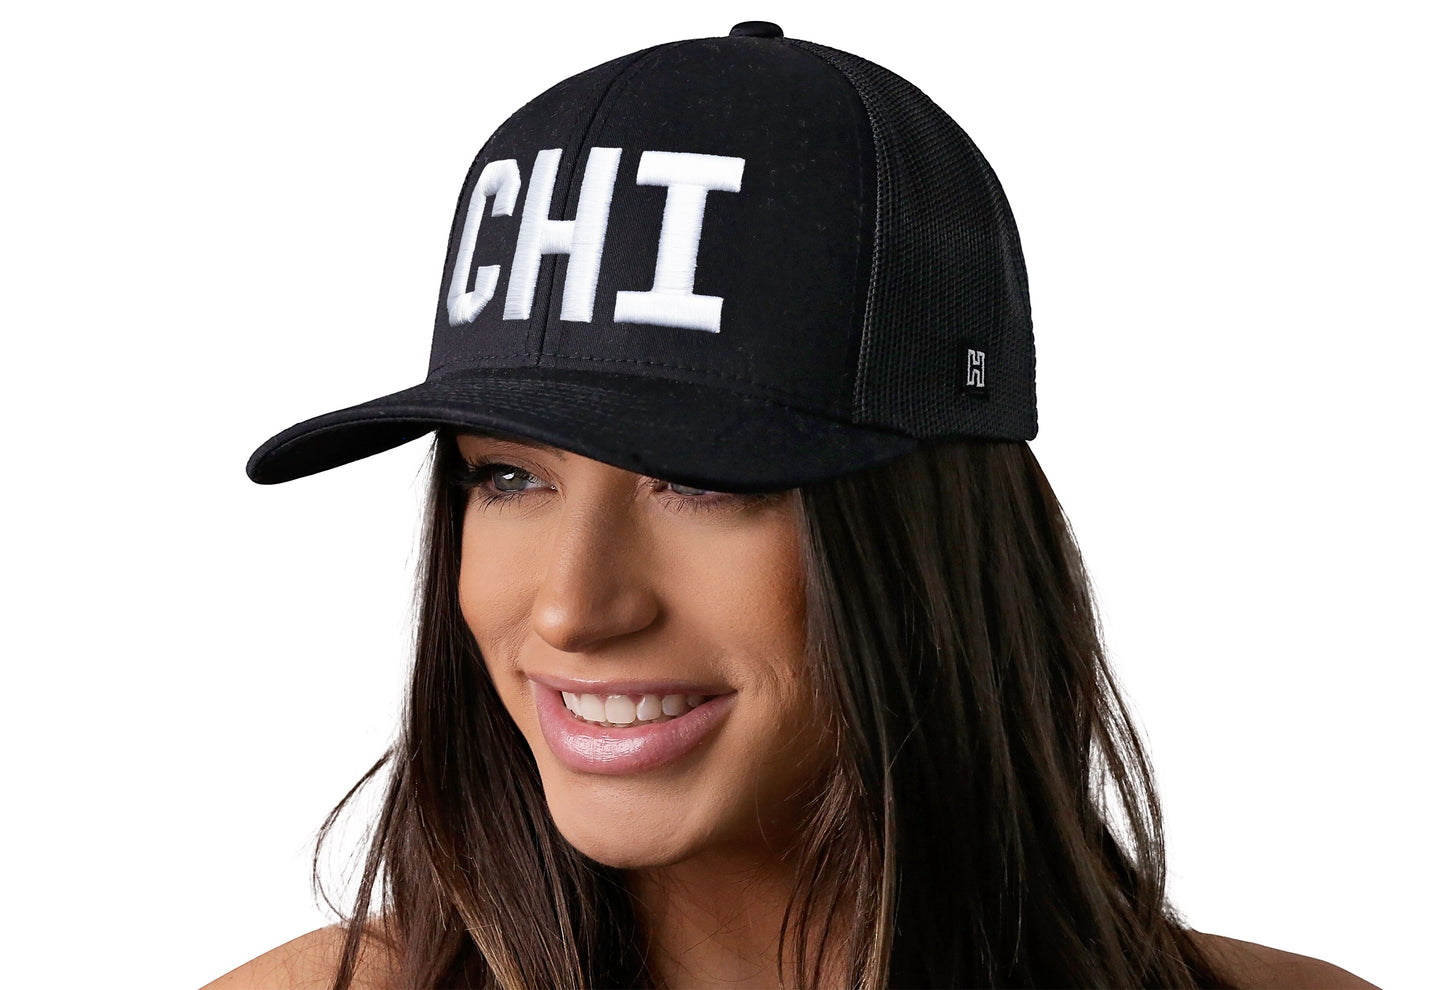 CHI Trucker Hat  |  Black CHI Snapback